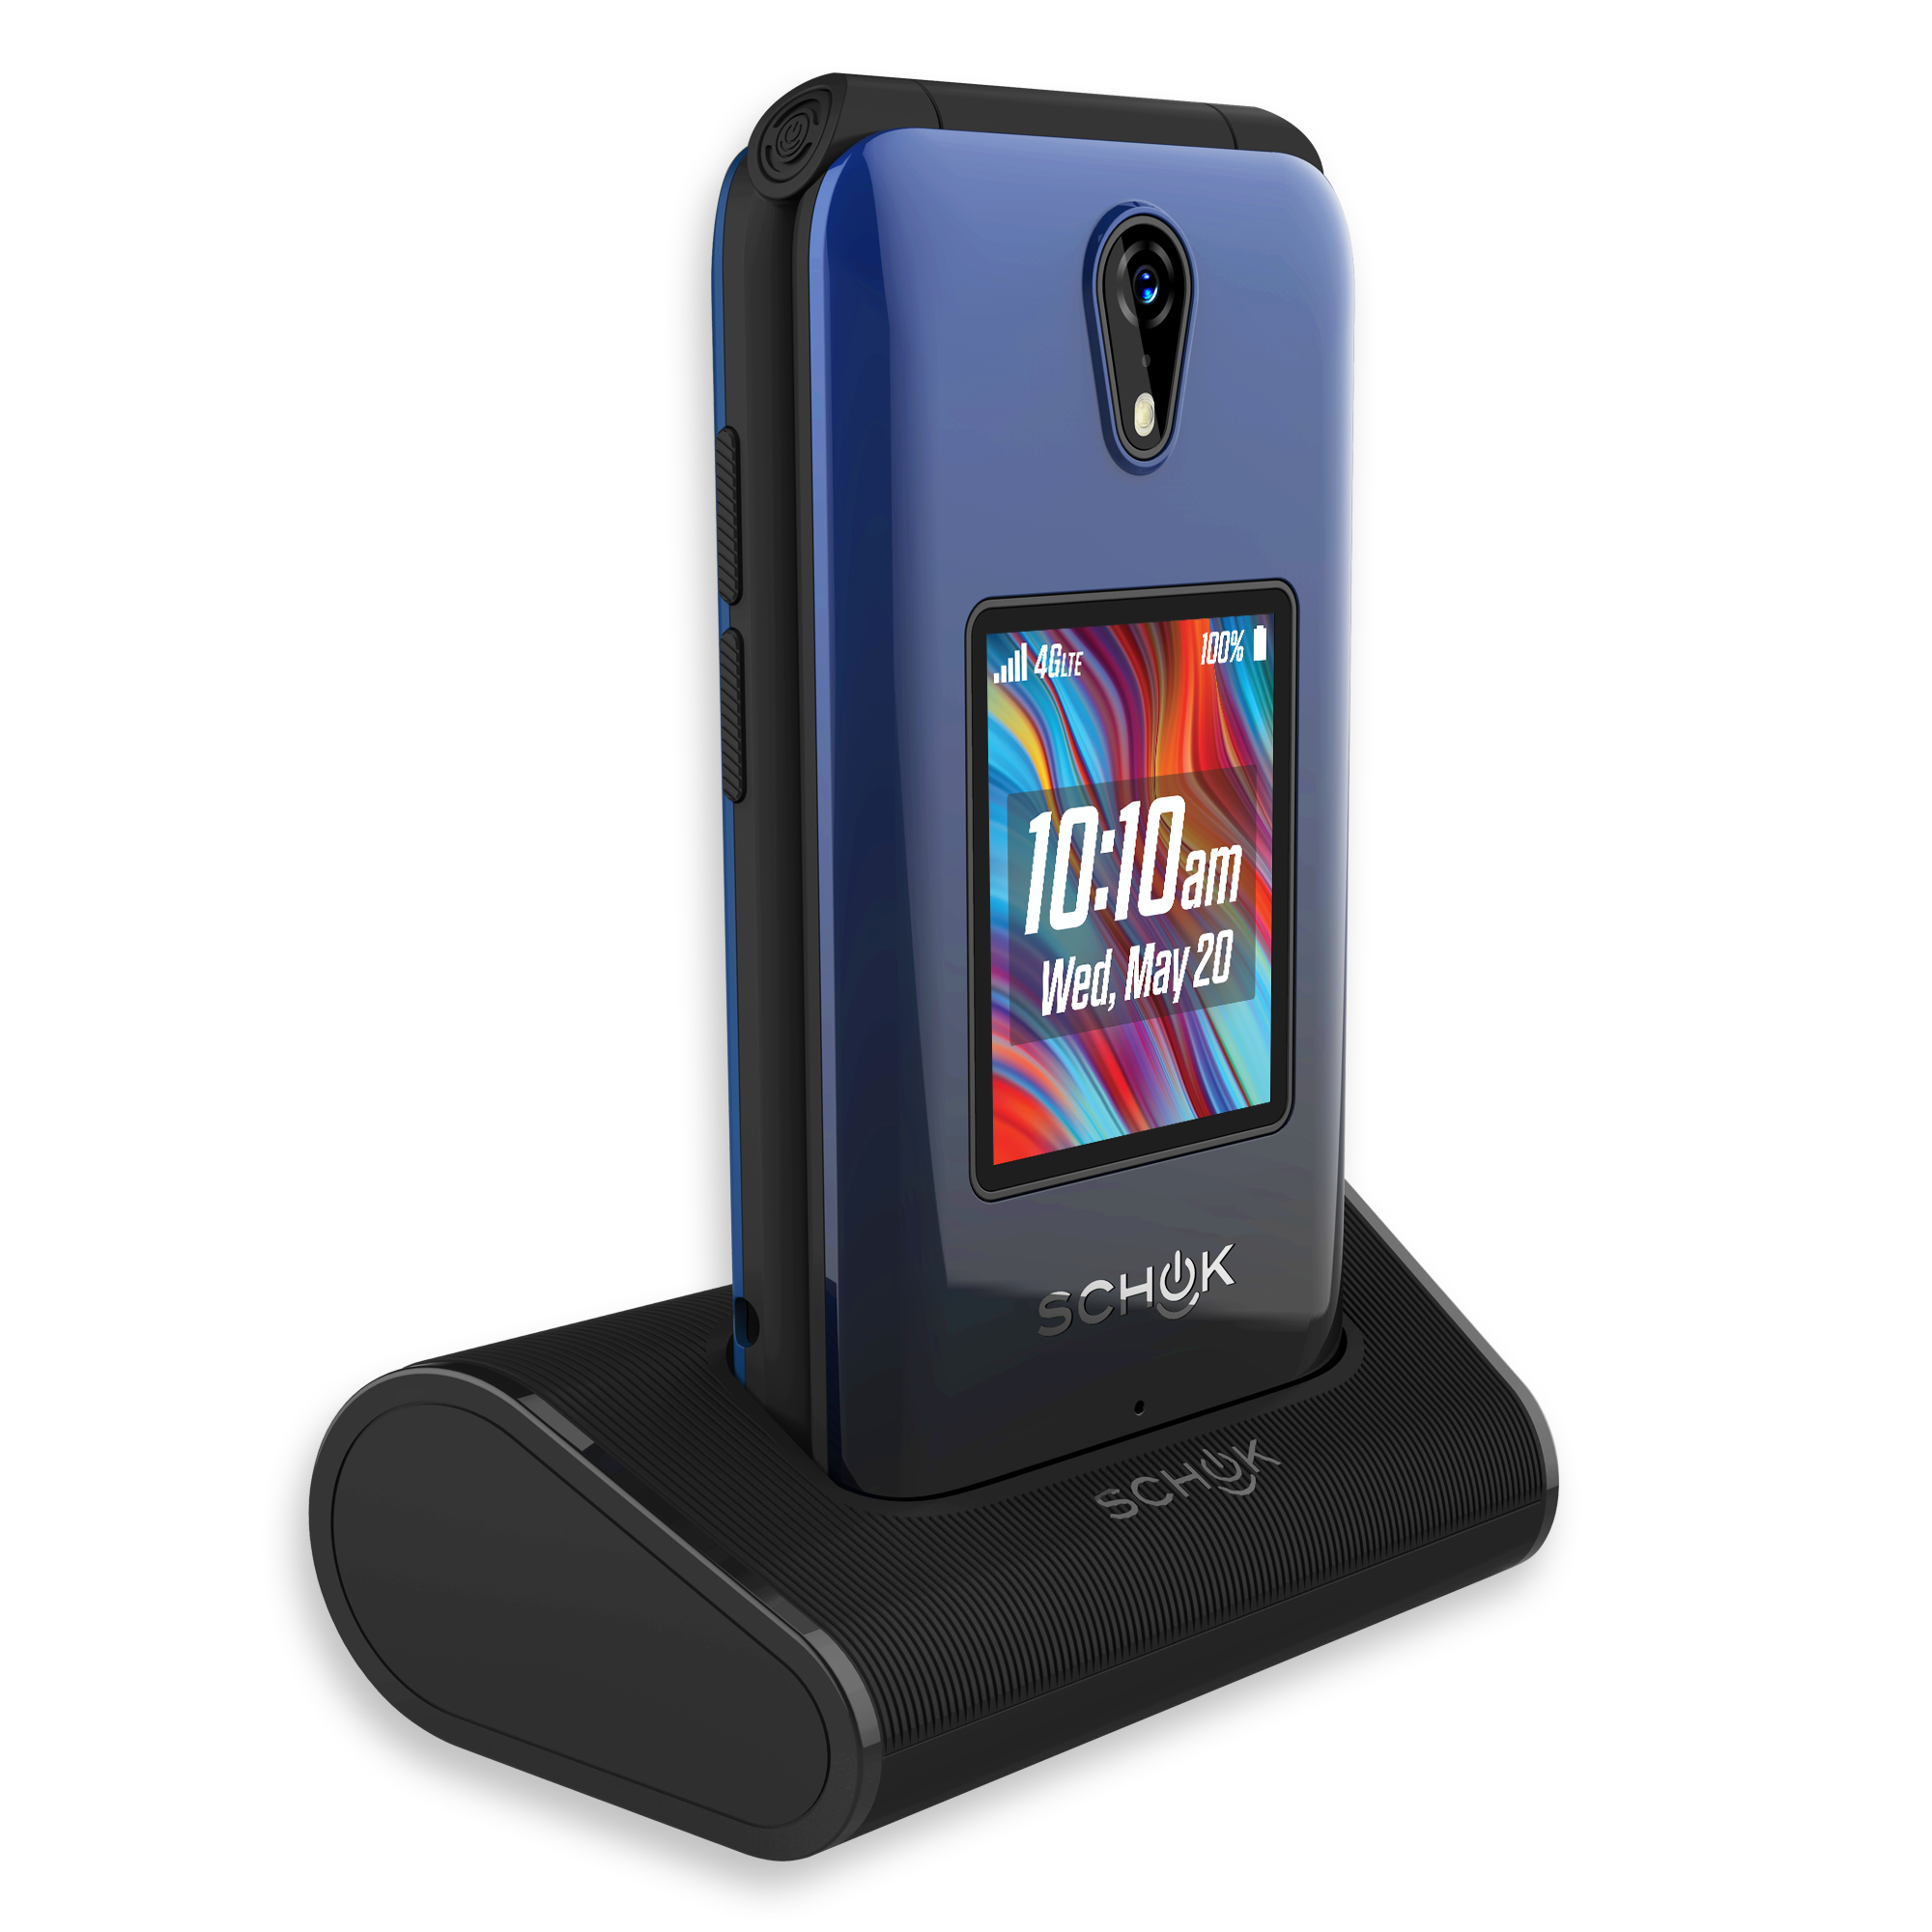 Schok Classic Flip Phone 4g Lte With Oversized Keypad Accessories